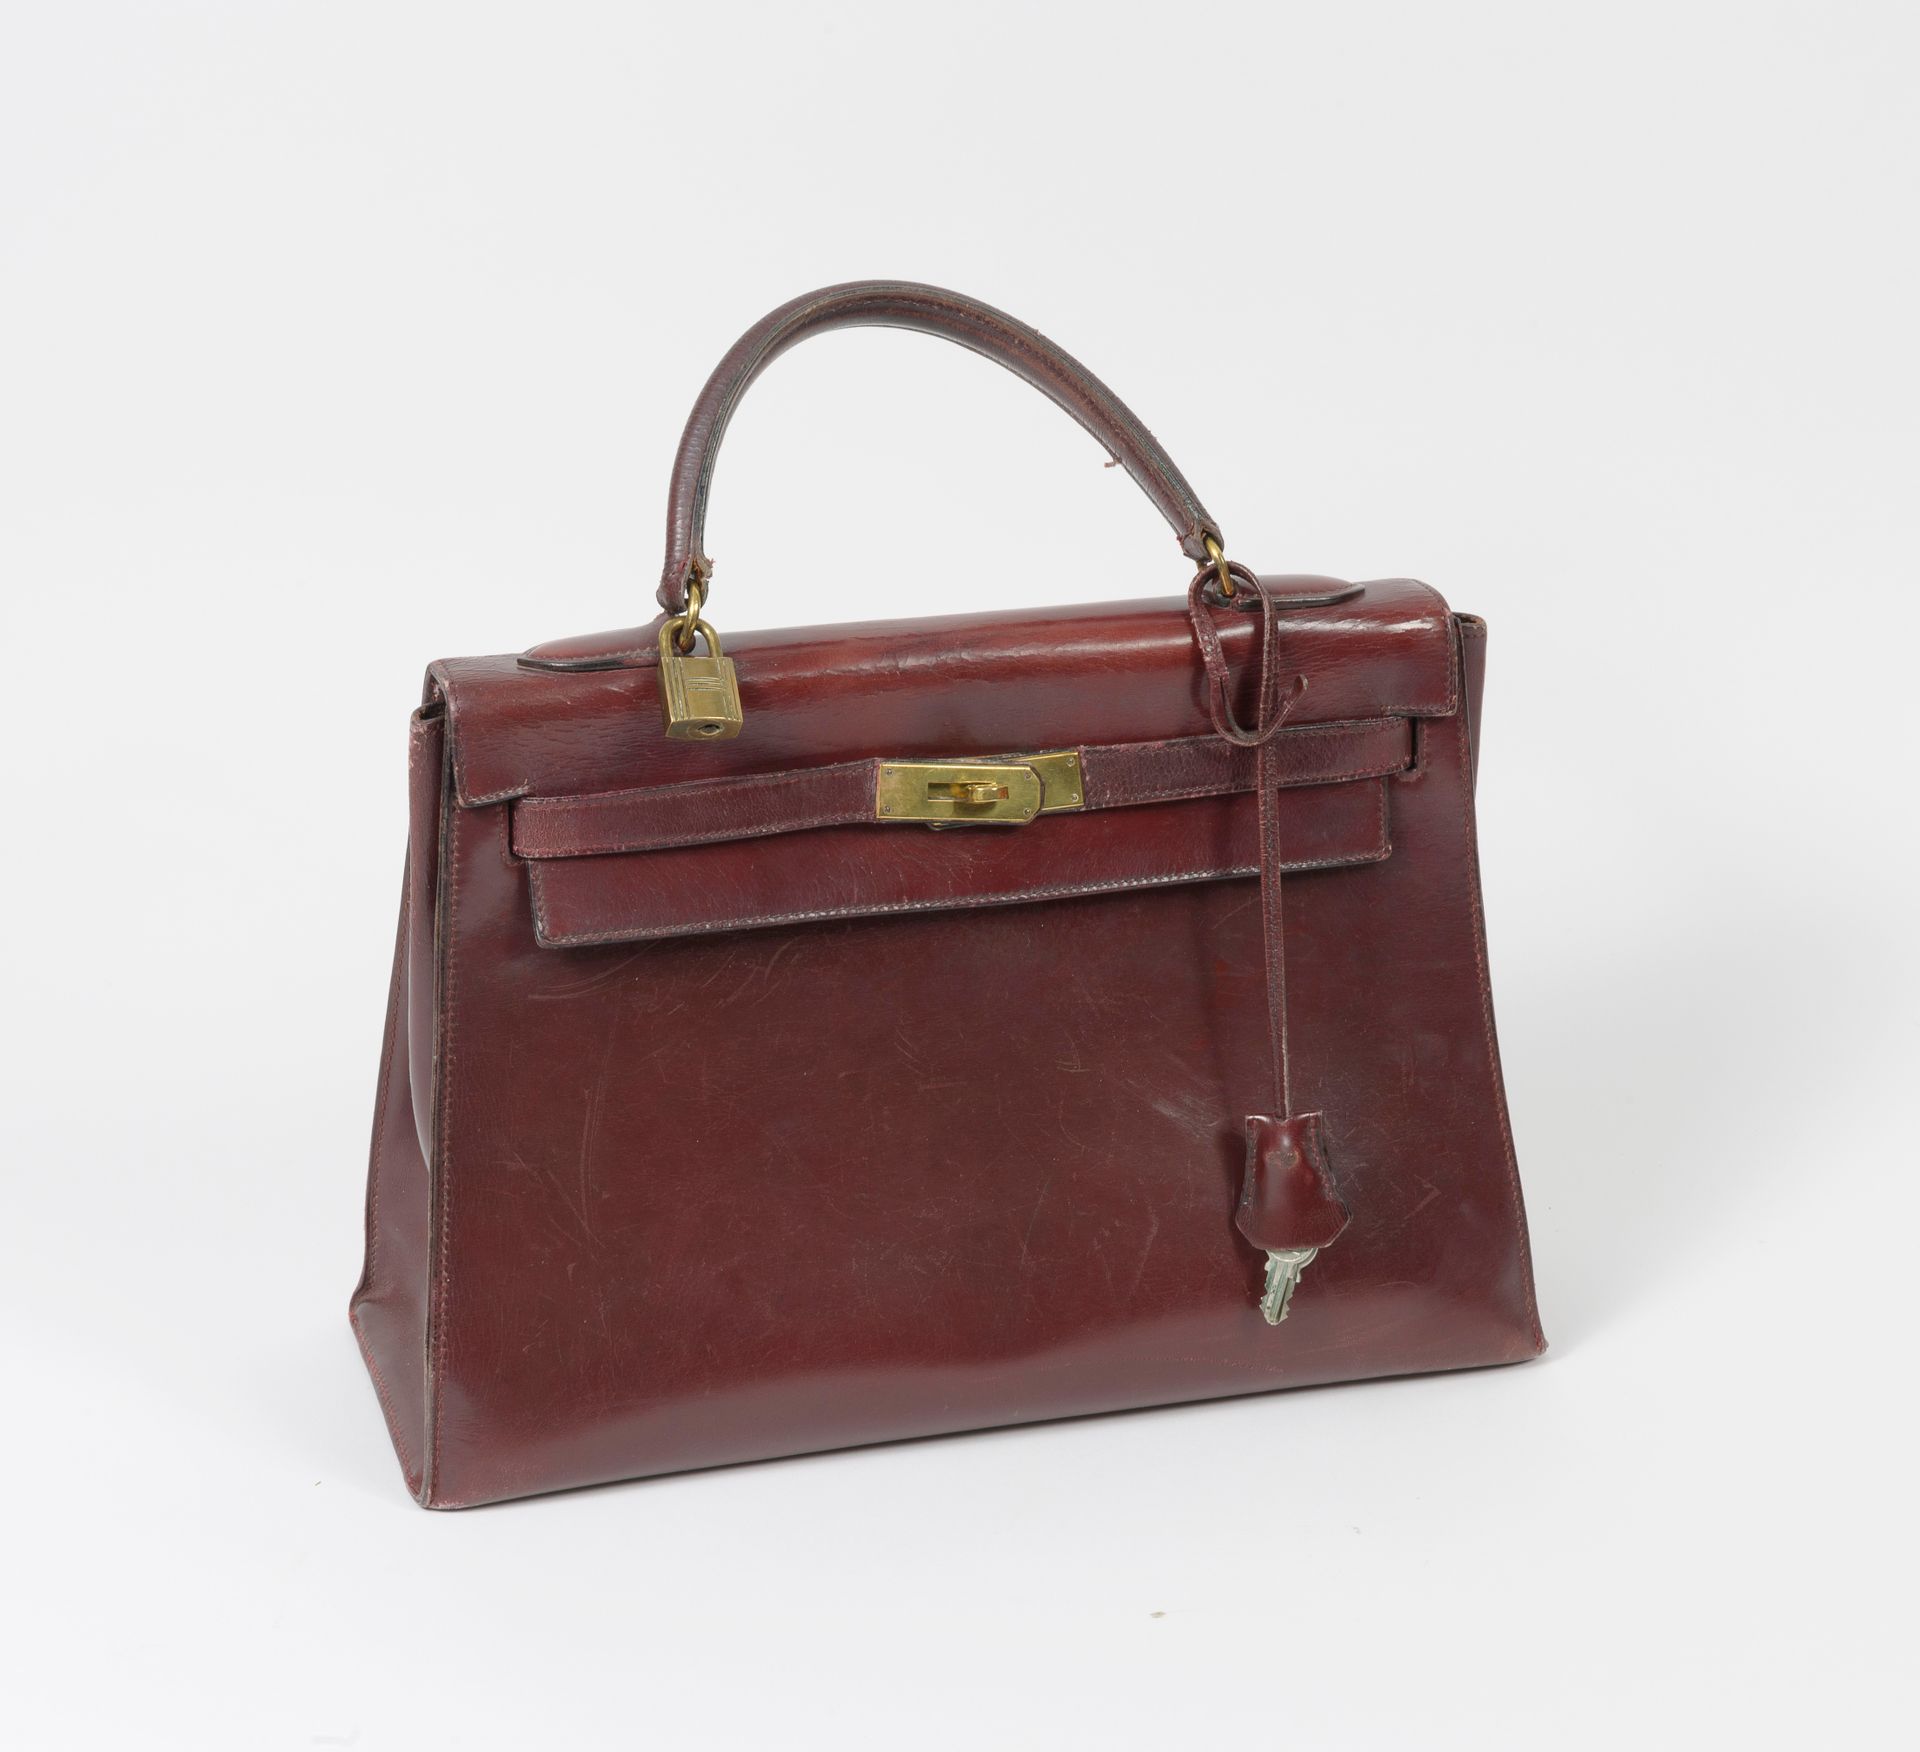 HERMES Paris Kelly Bag 32 cm in roter Hermès-Schachtel, sattelgenähtes Modell. 
&hellip;